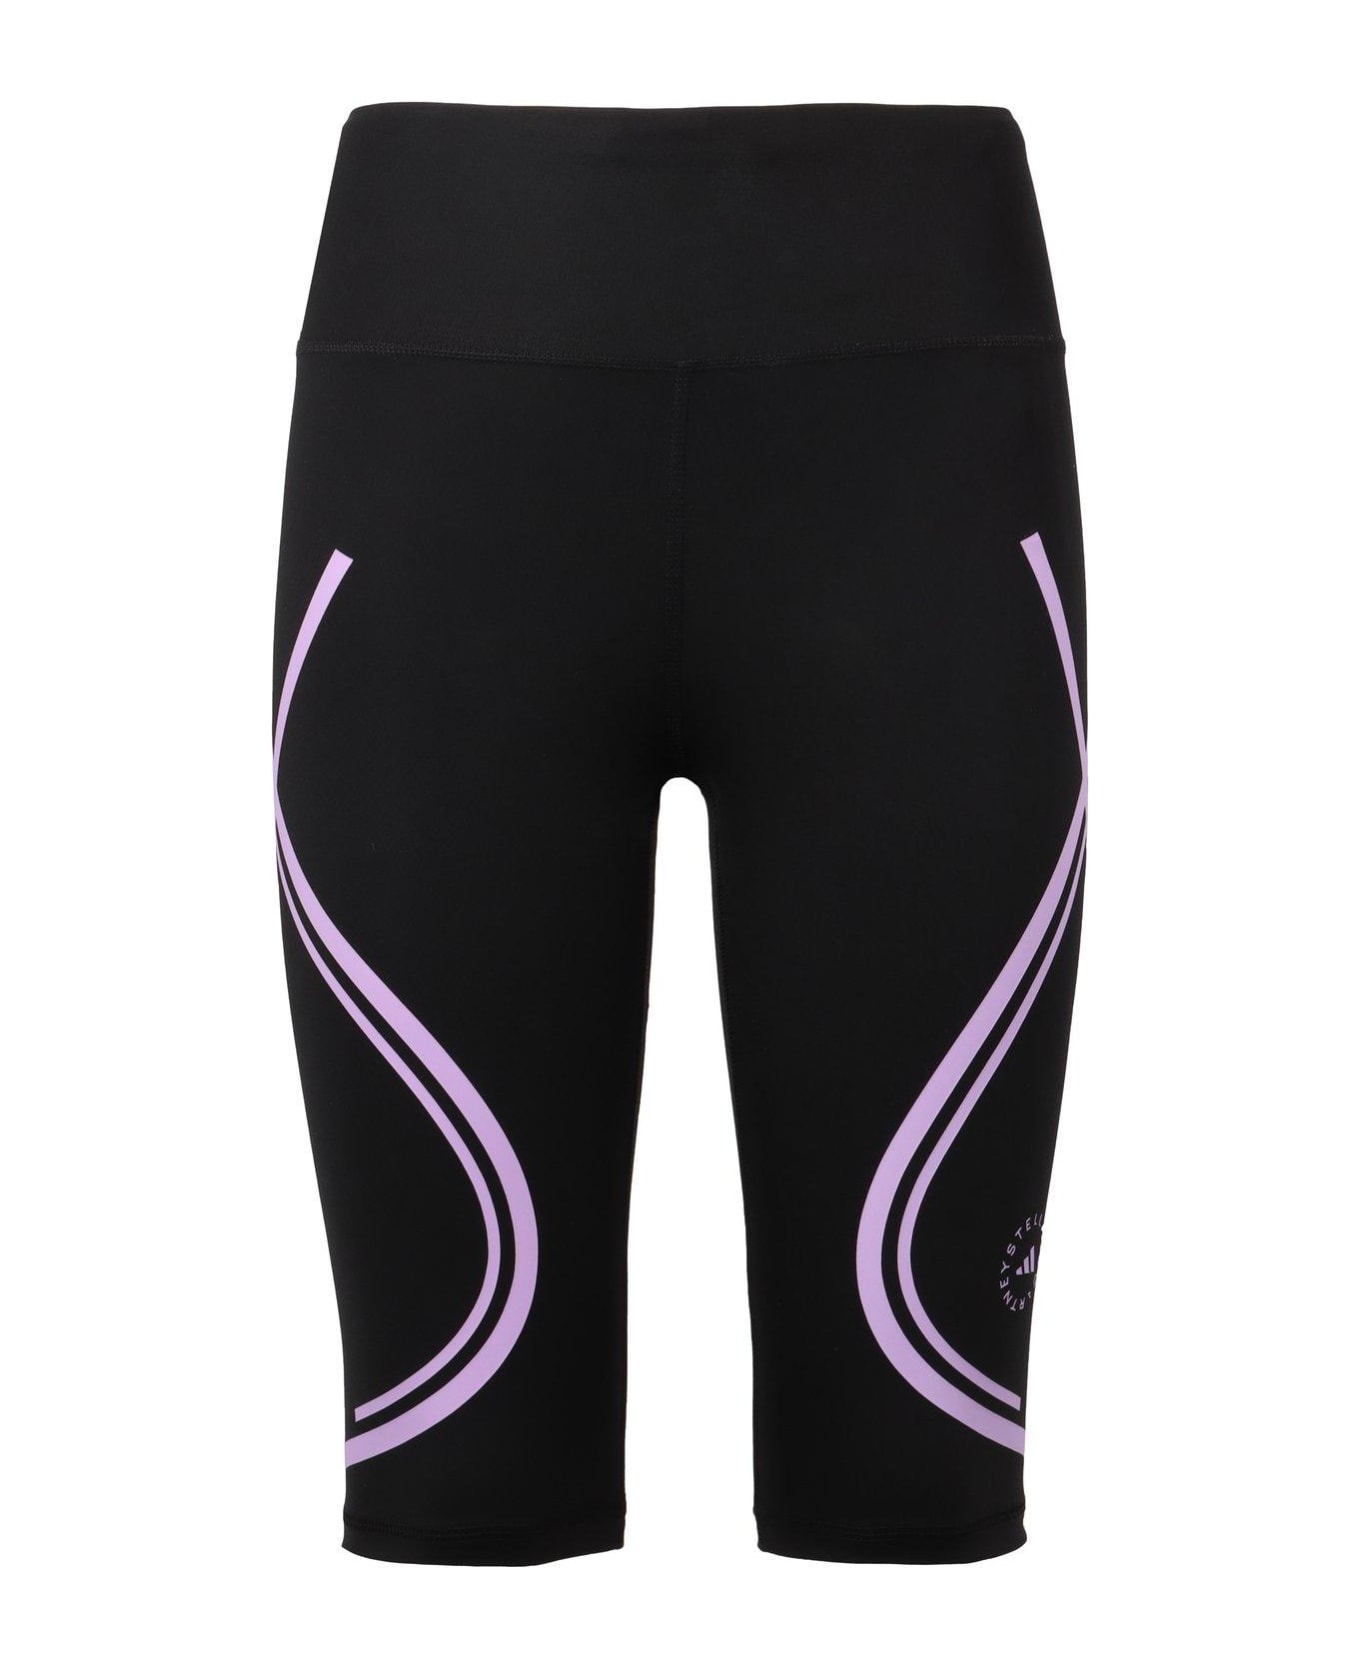 Adidas by Stella McCartney Truepace Running Cycling Shorts - BLACK/PURPLE